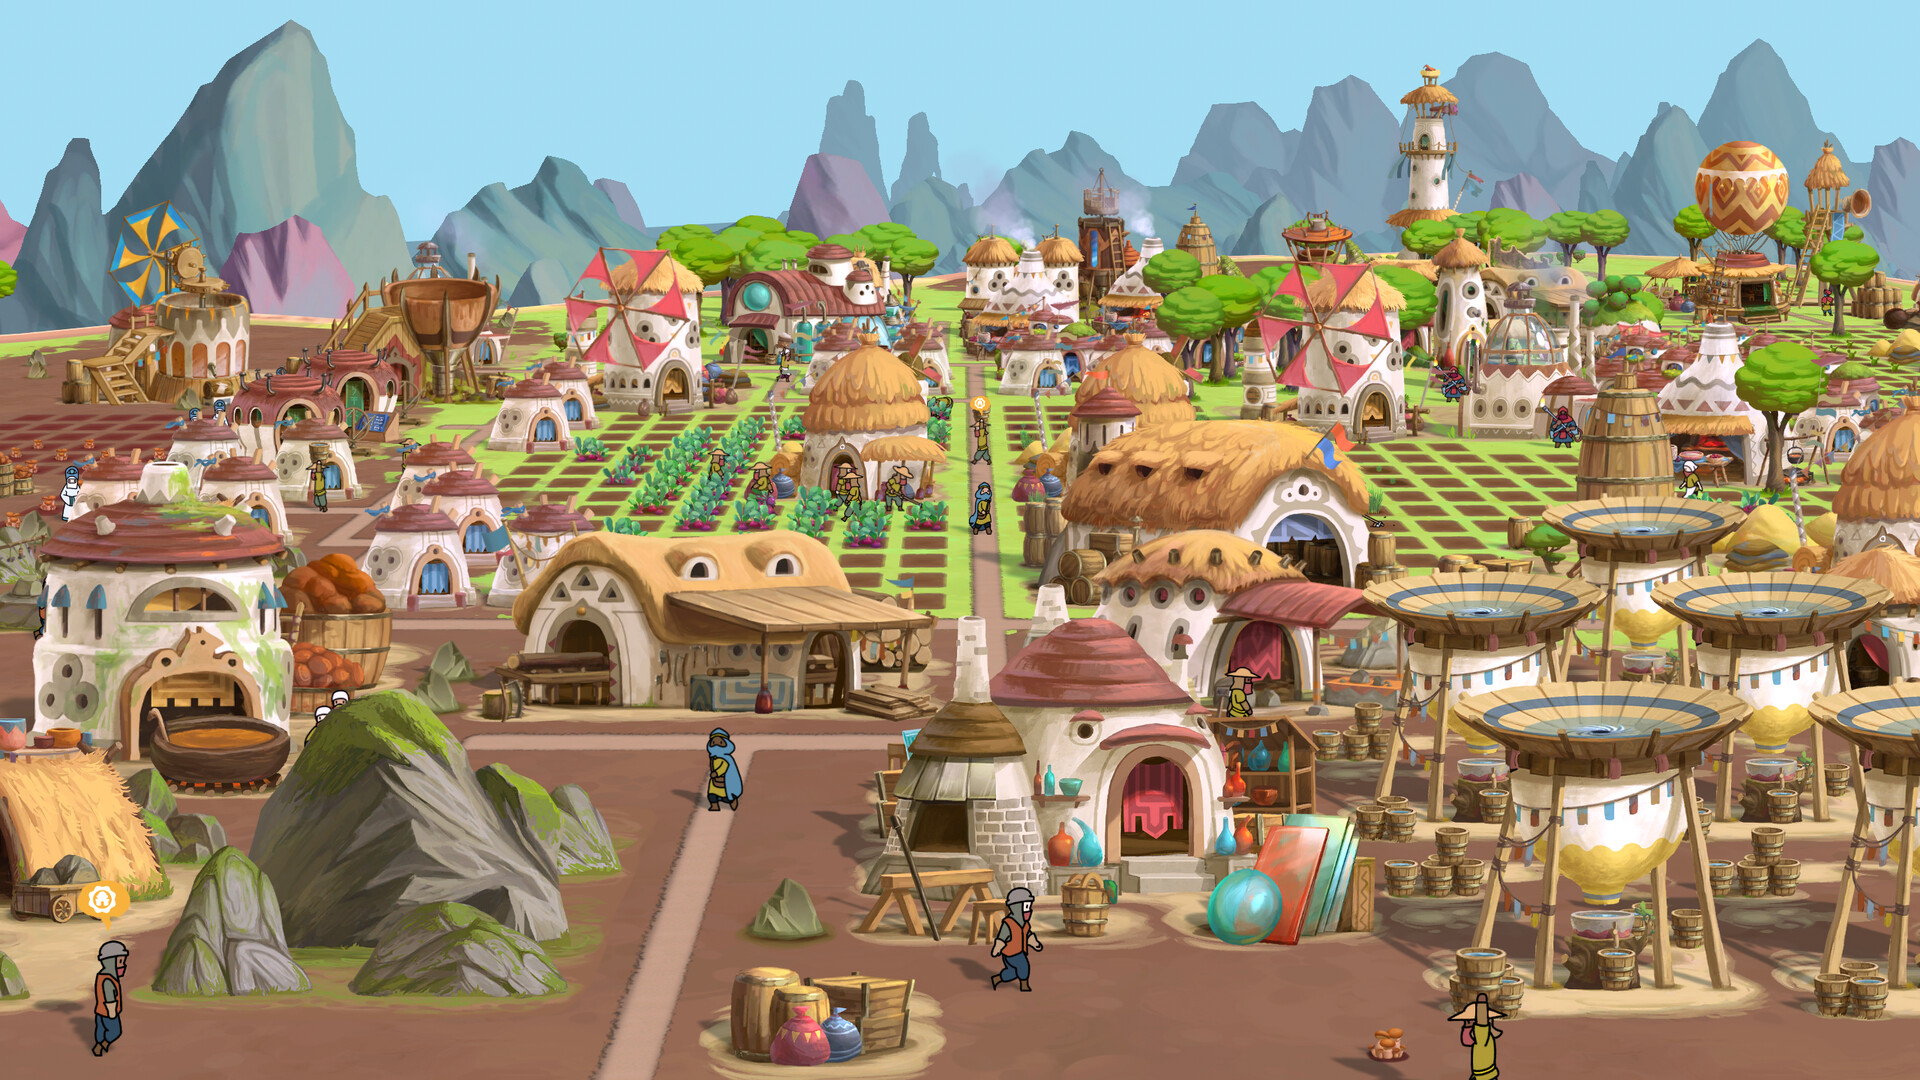 漂泊牧歌/The Wandering Village（豪华版-Build.9514077-0.1.32+全DLC）